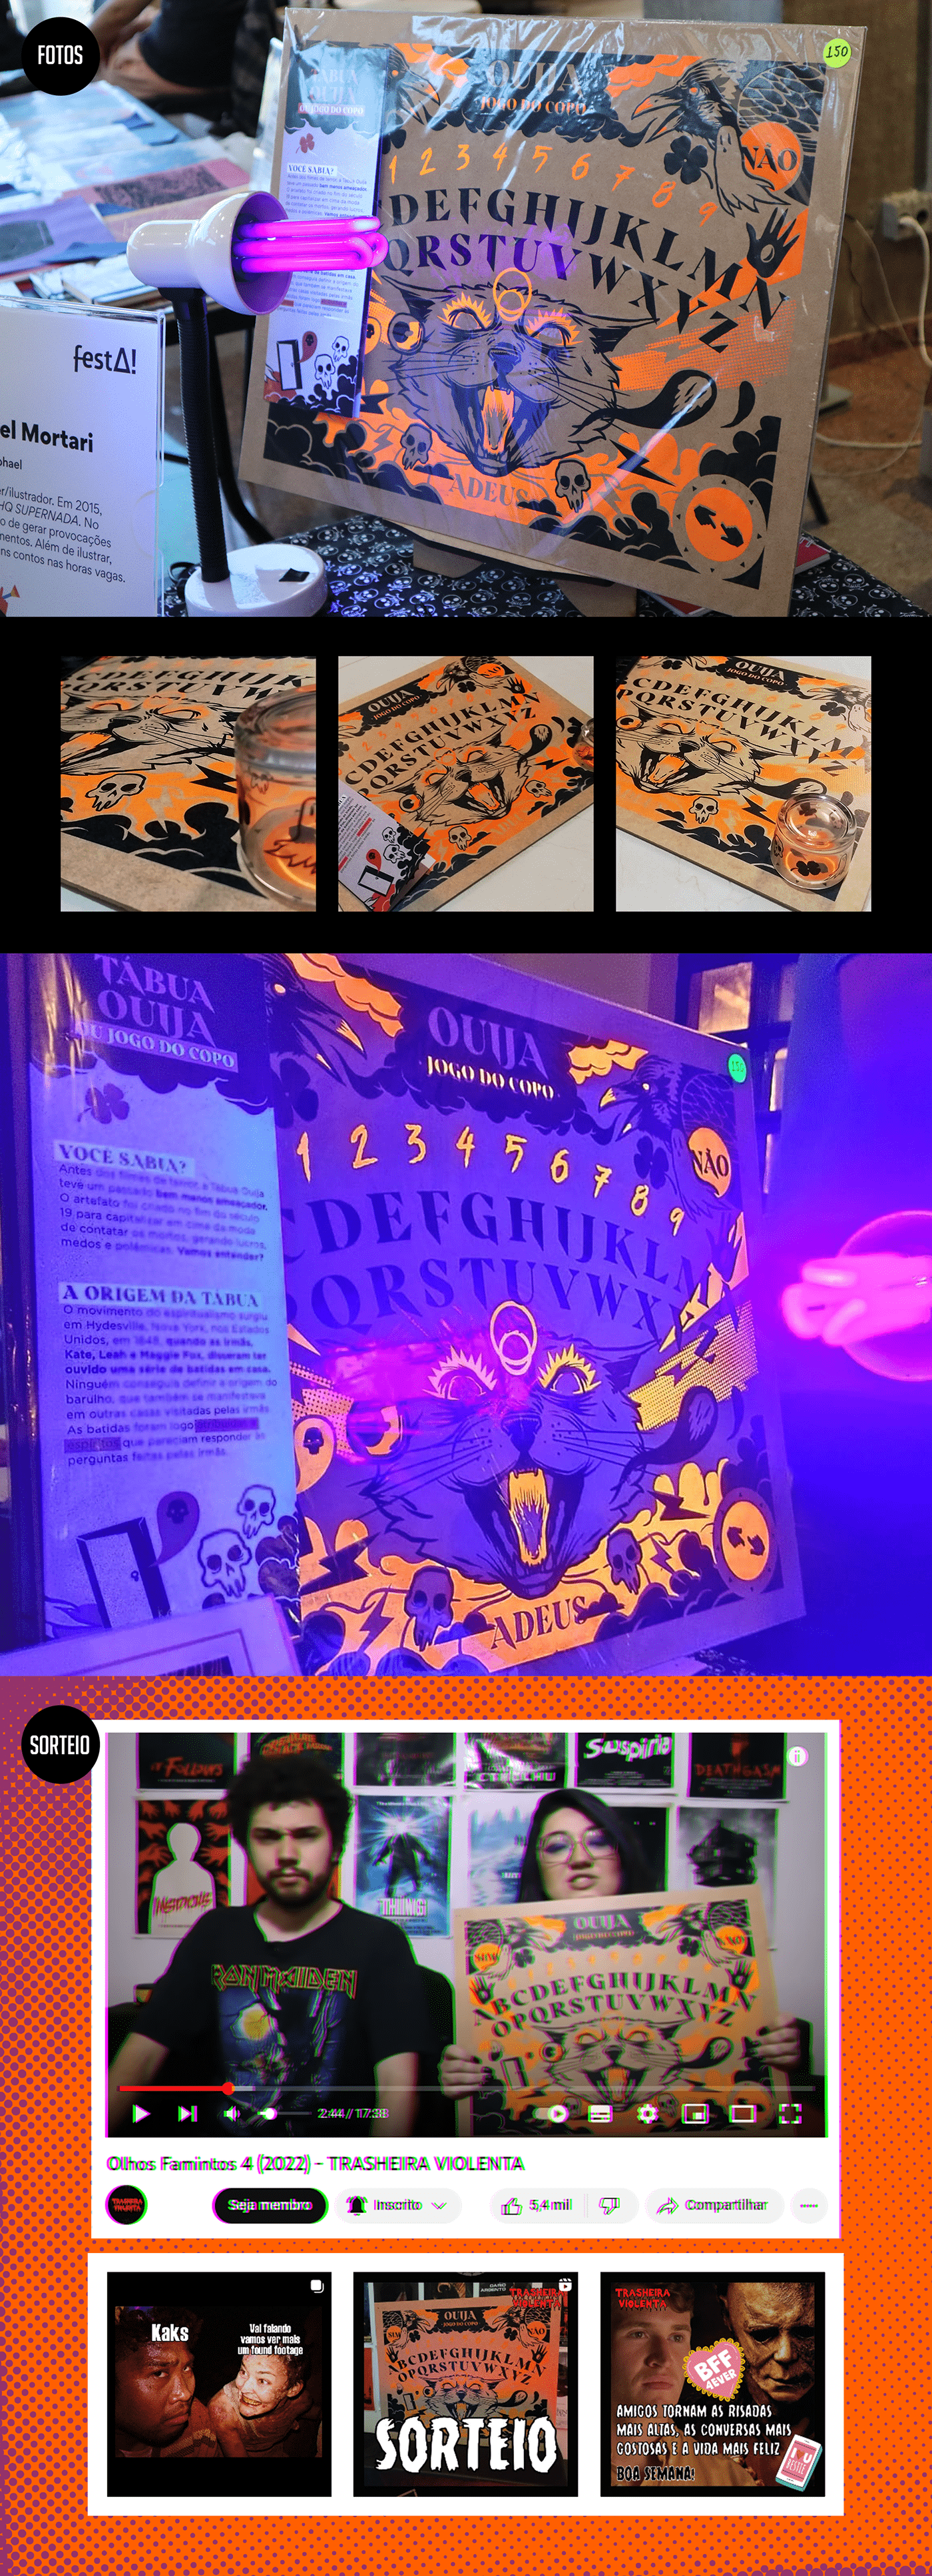 Decoração decorative ilustration jogo do copo MDF board mistic mistico ouija ouija board tábua ouija